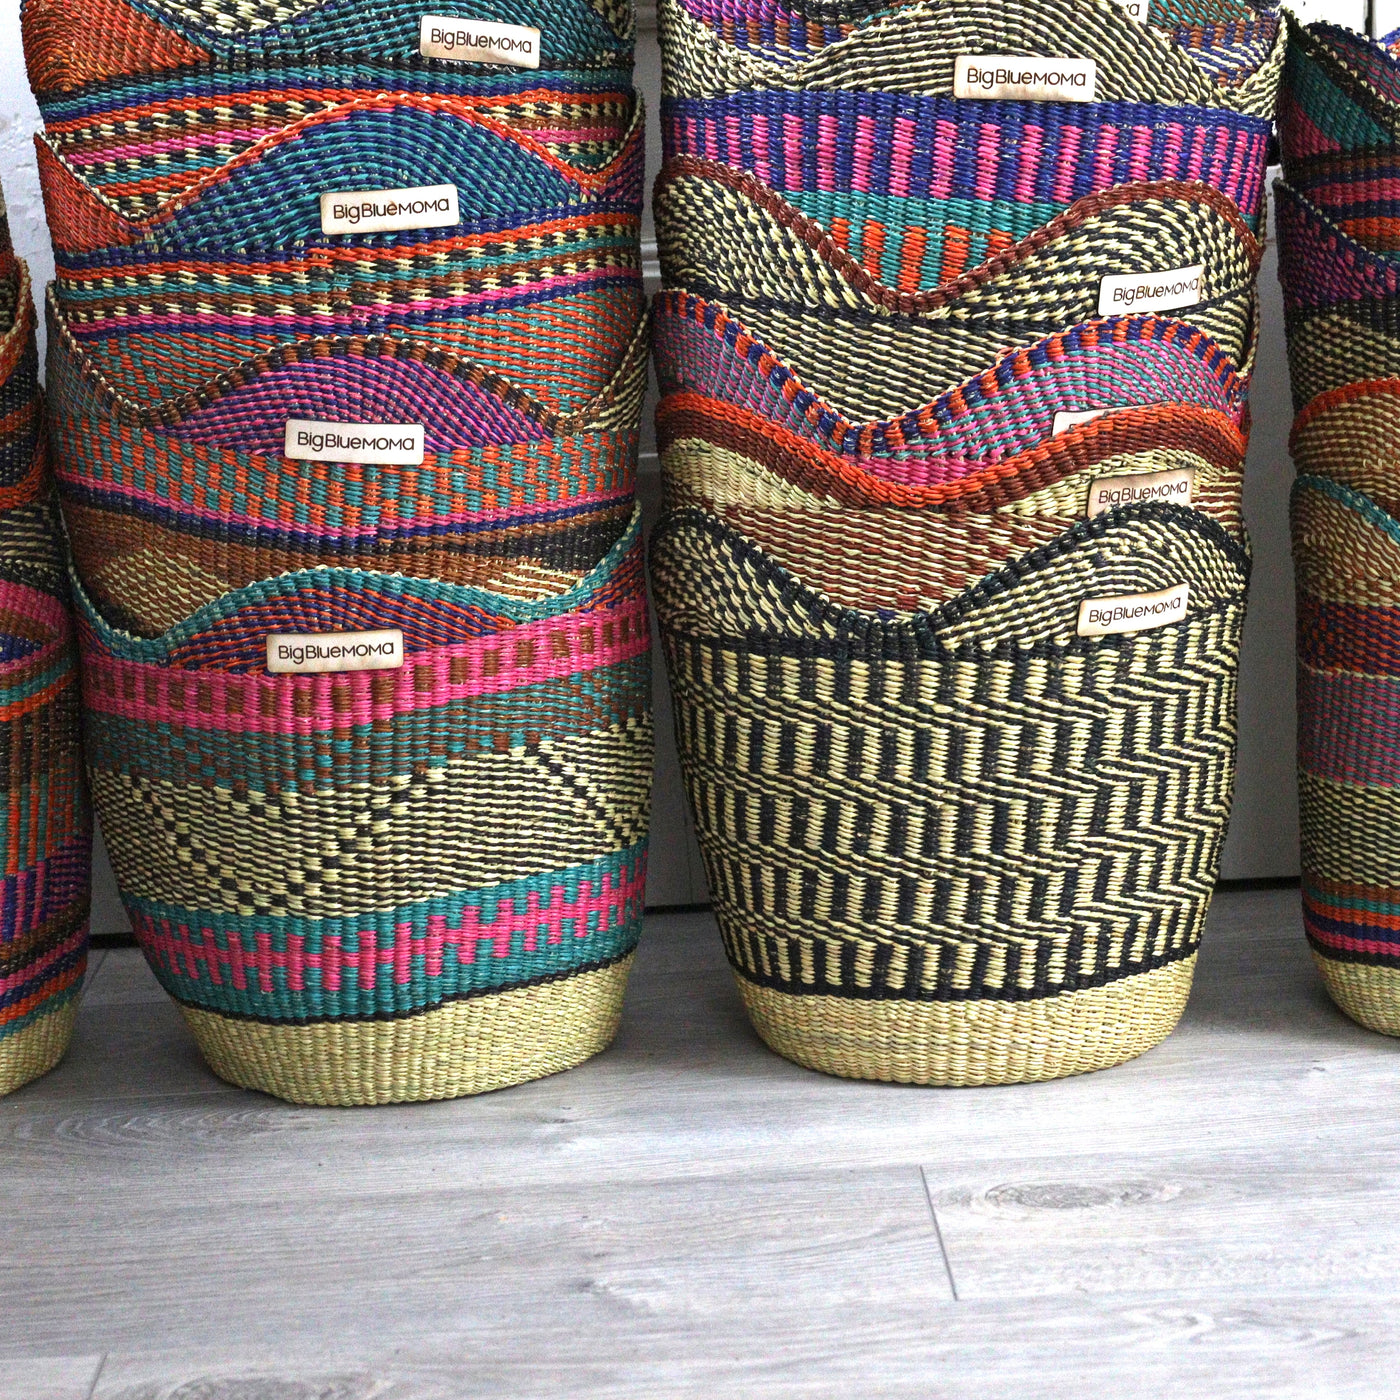 Planter Baskets